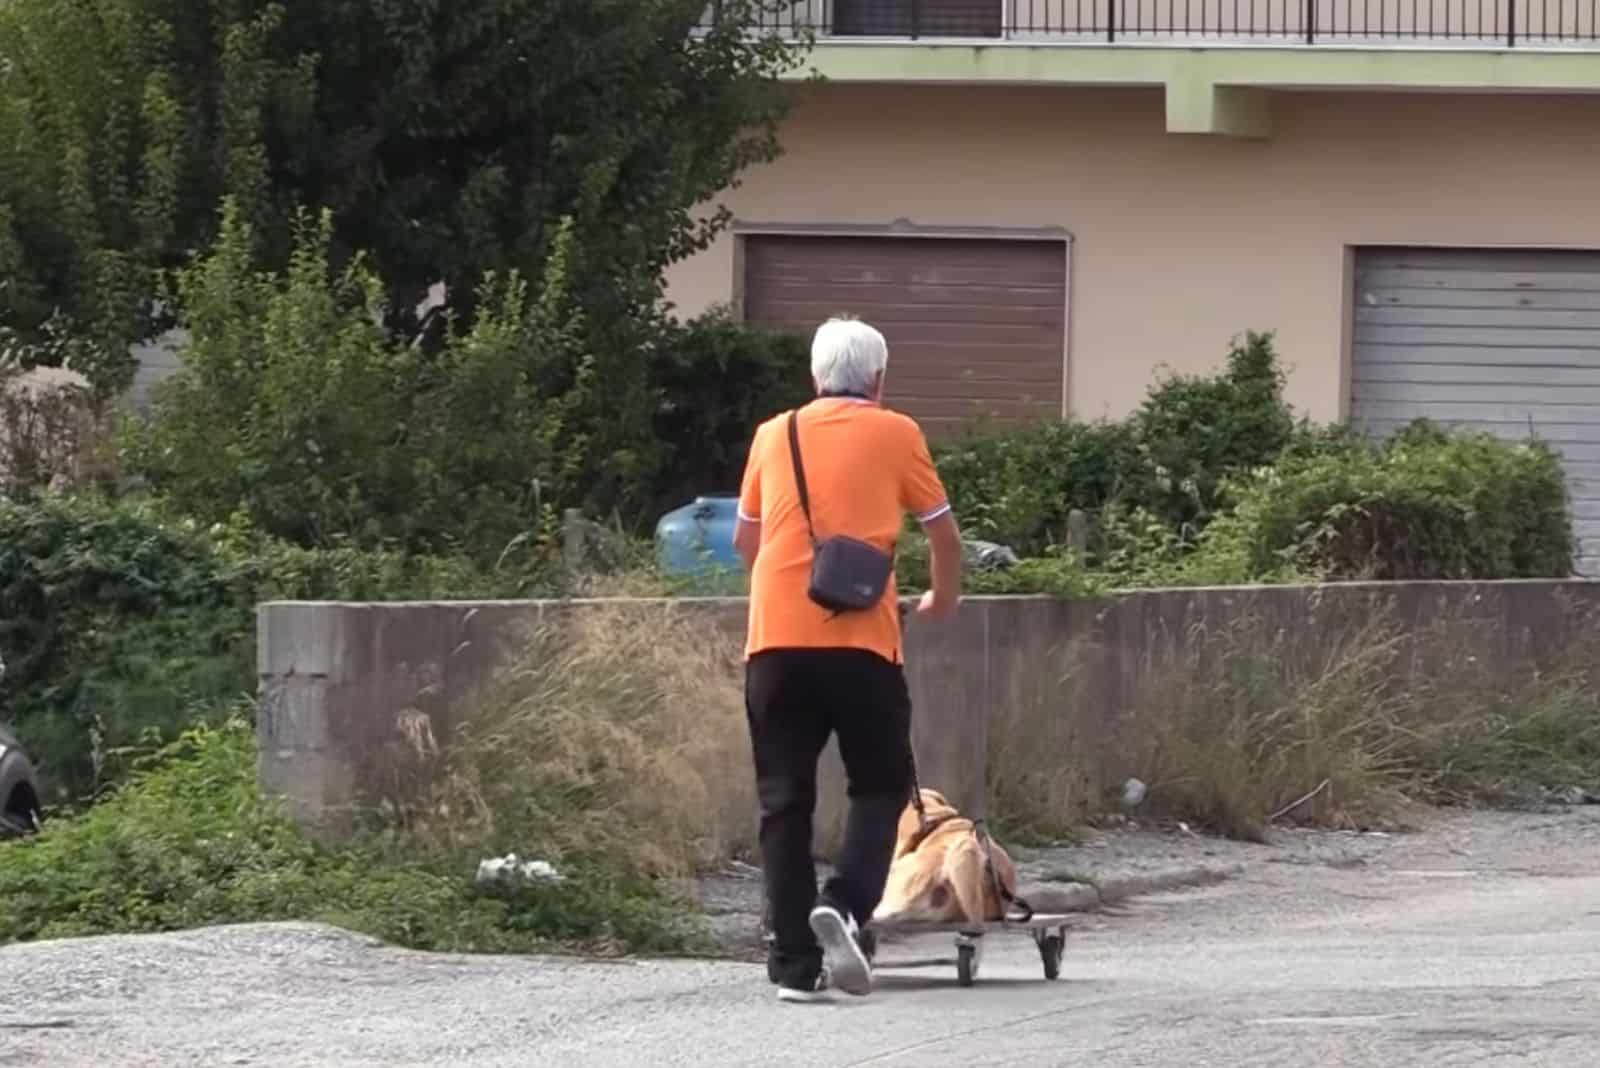 man walks his dog using an improvised cart